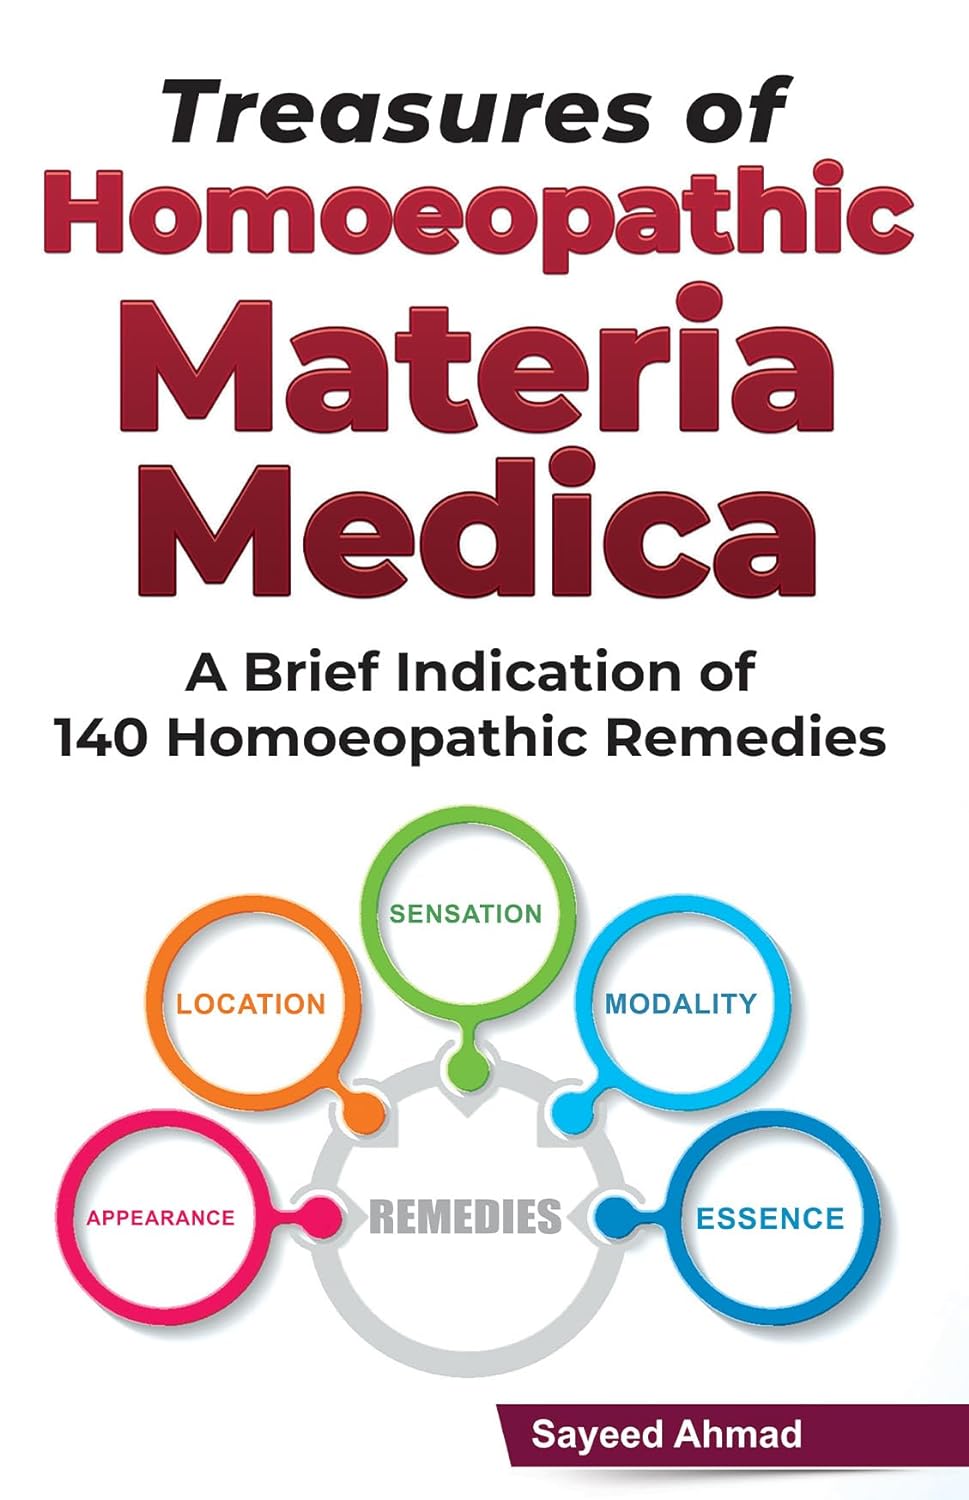 Treasures of Homoeopathic Materia Medica Treasures of Homoeopathic Materia Medica- a brief introduction of 140 homoeopathic remedies